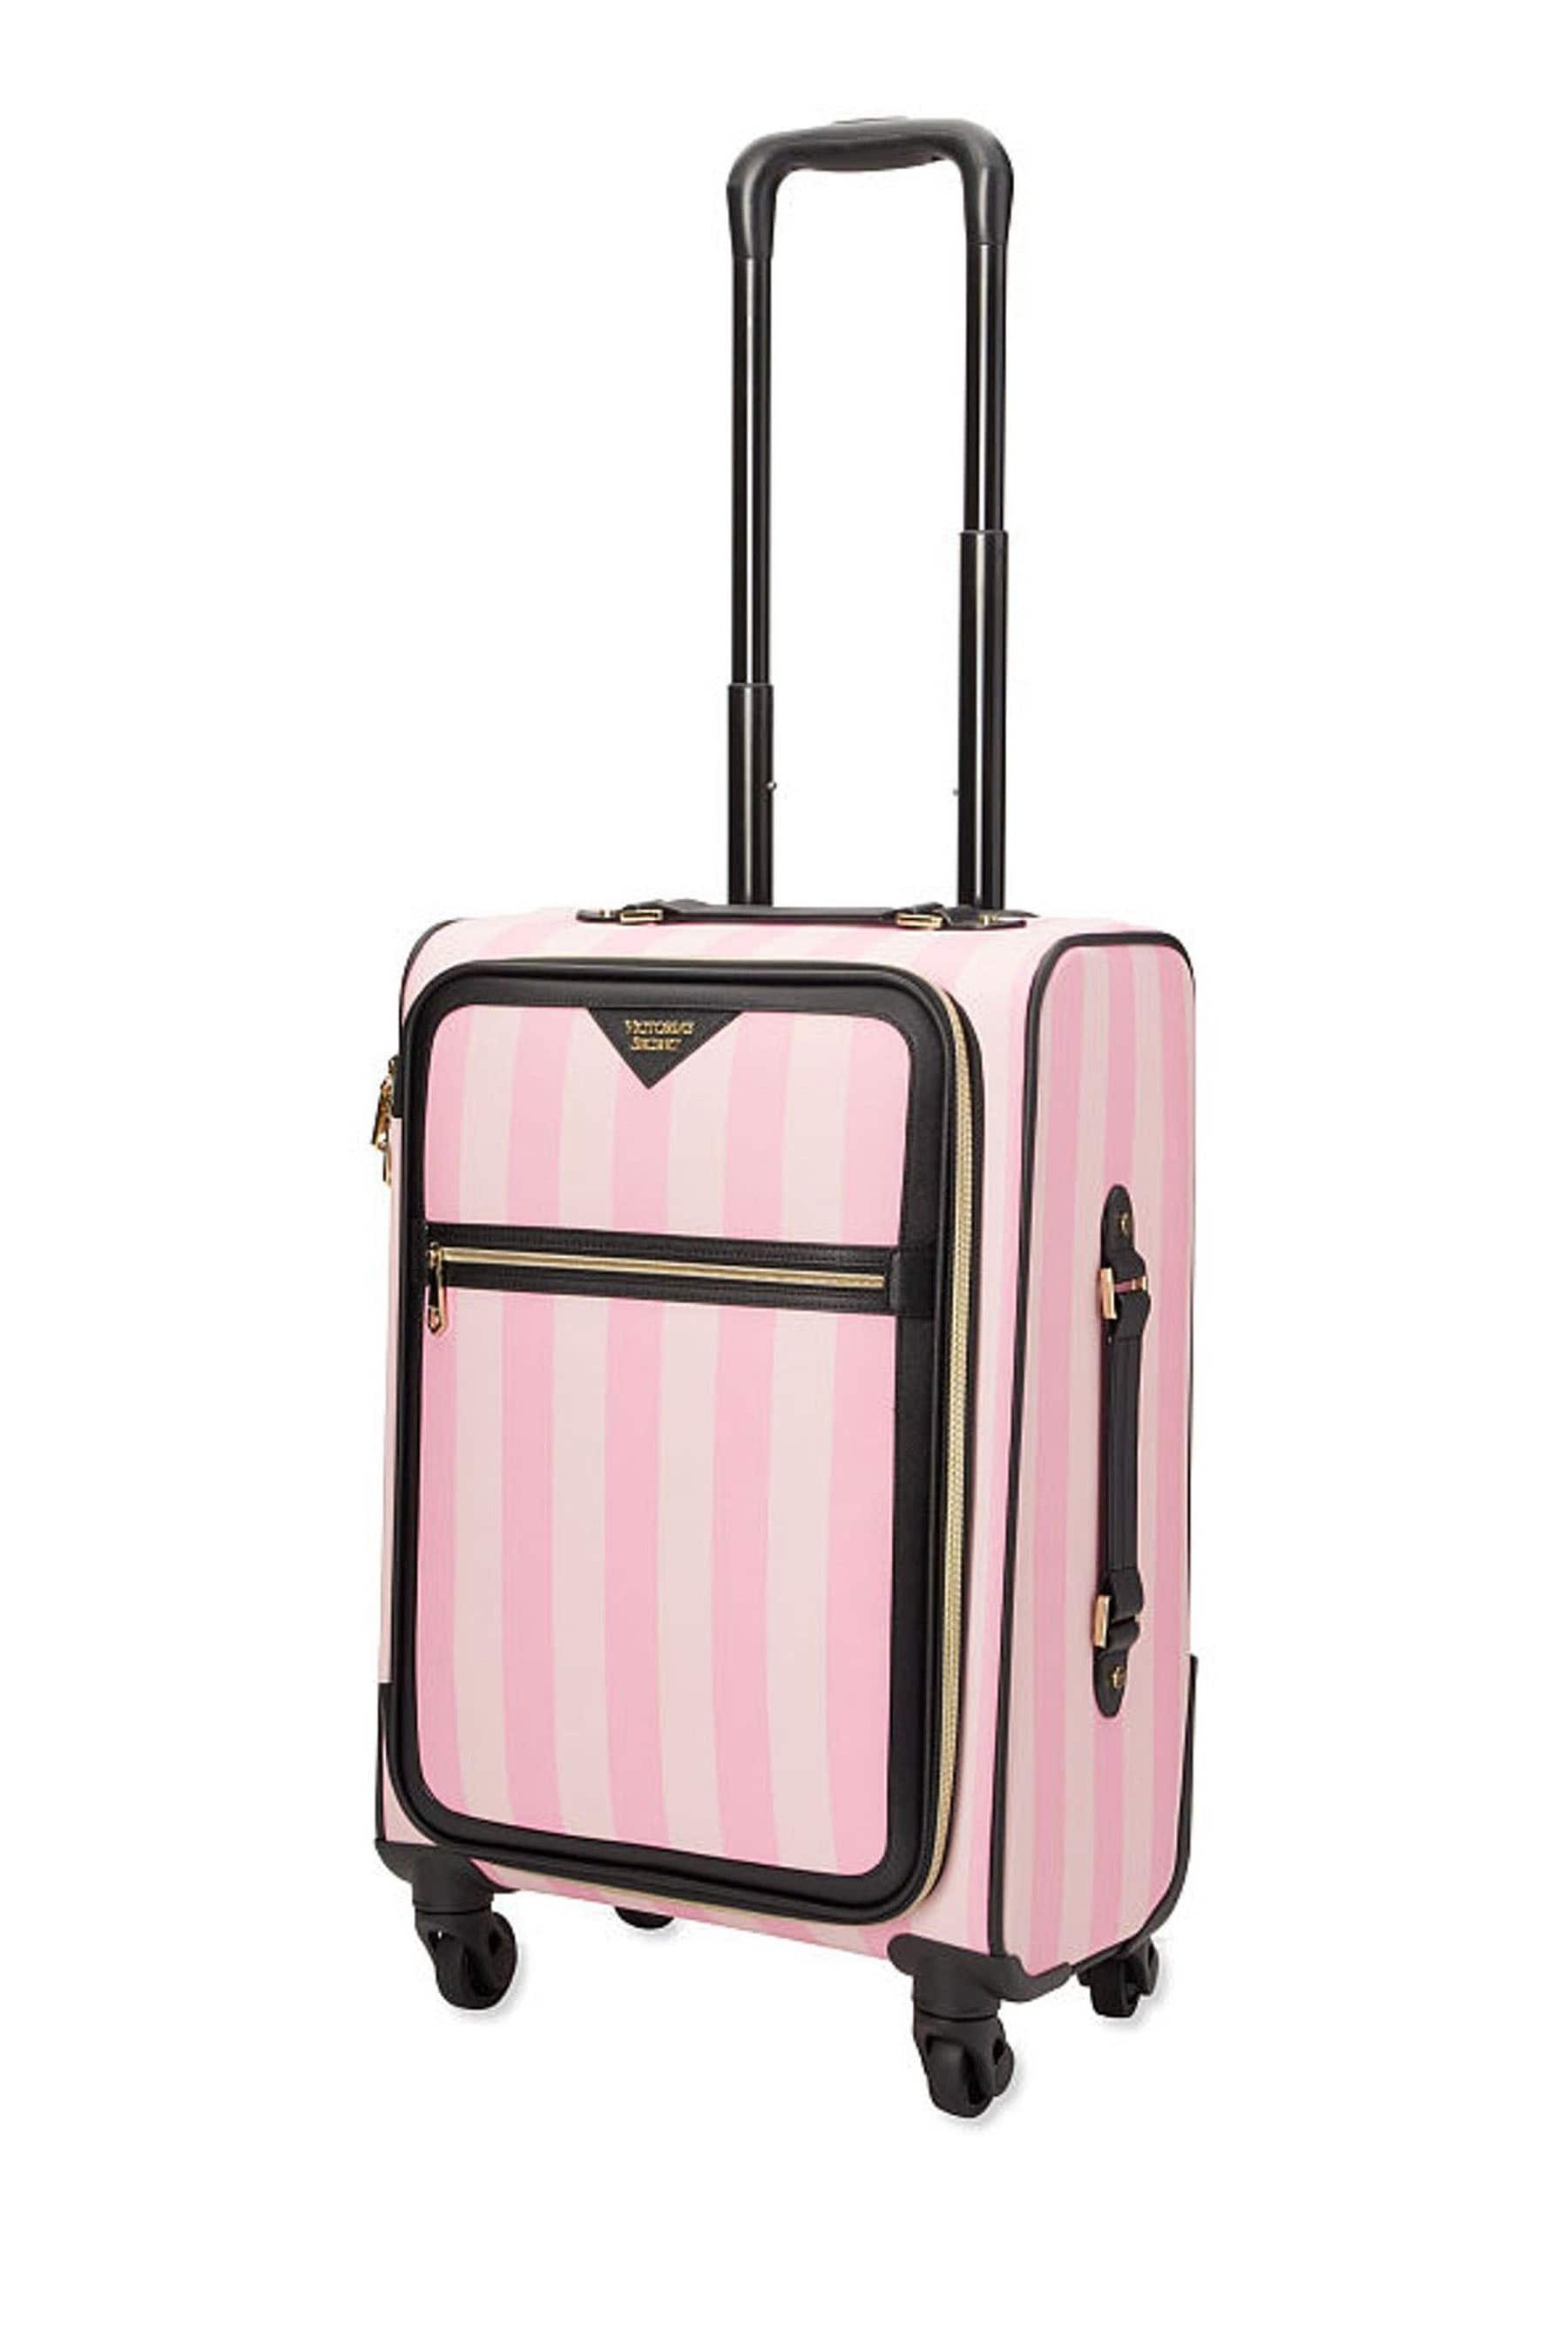 victoria secret travel luggage bag